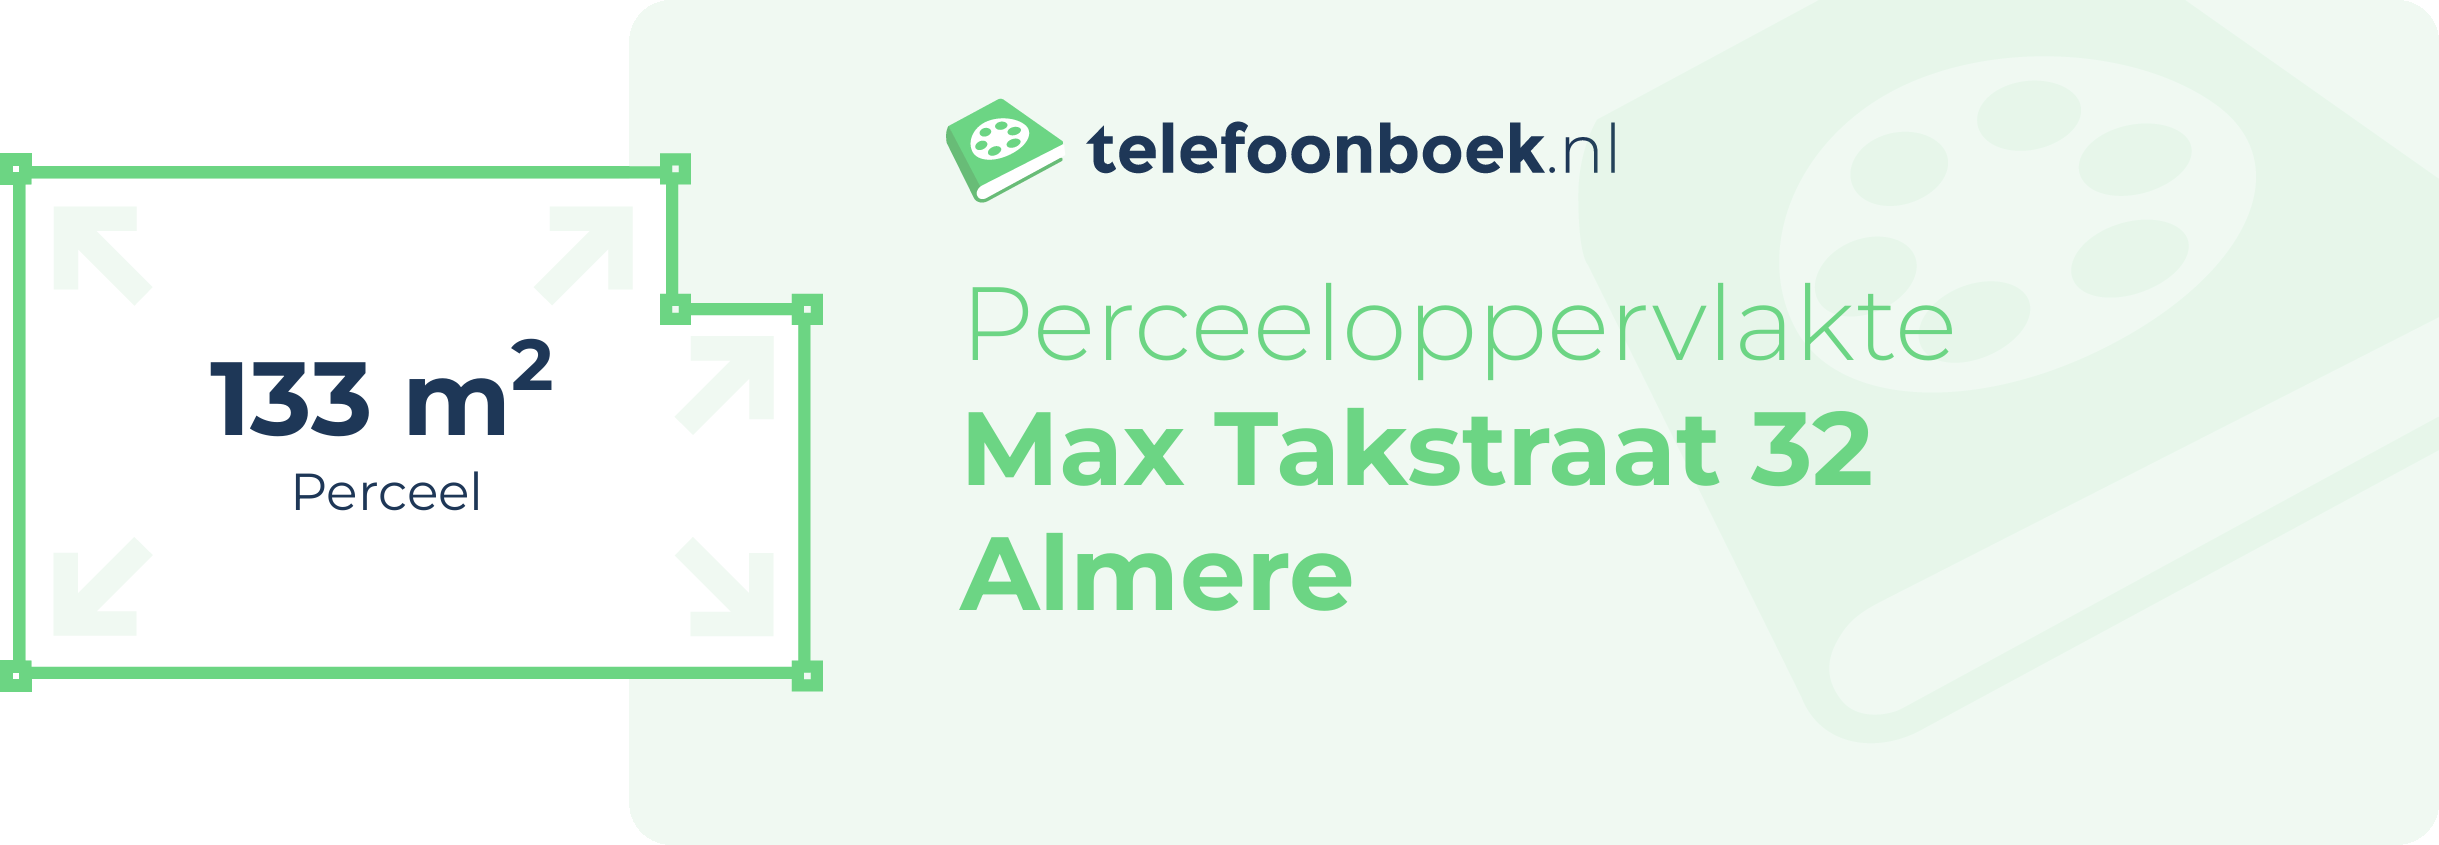 Perceeloppervlakte Max Takstraat 32 Almere